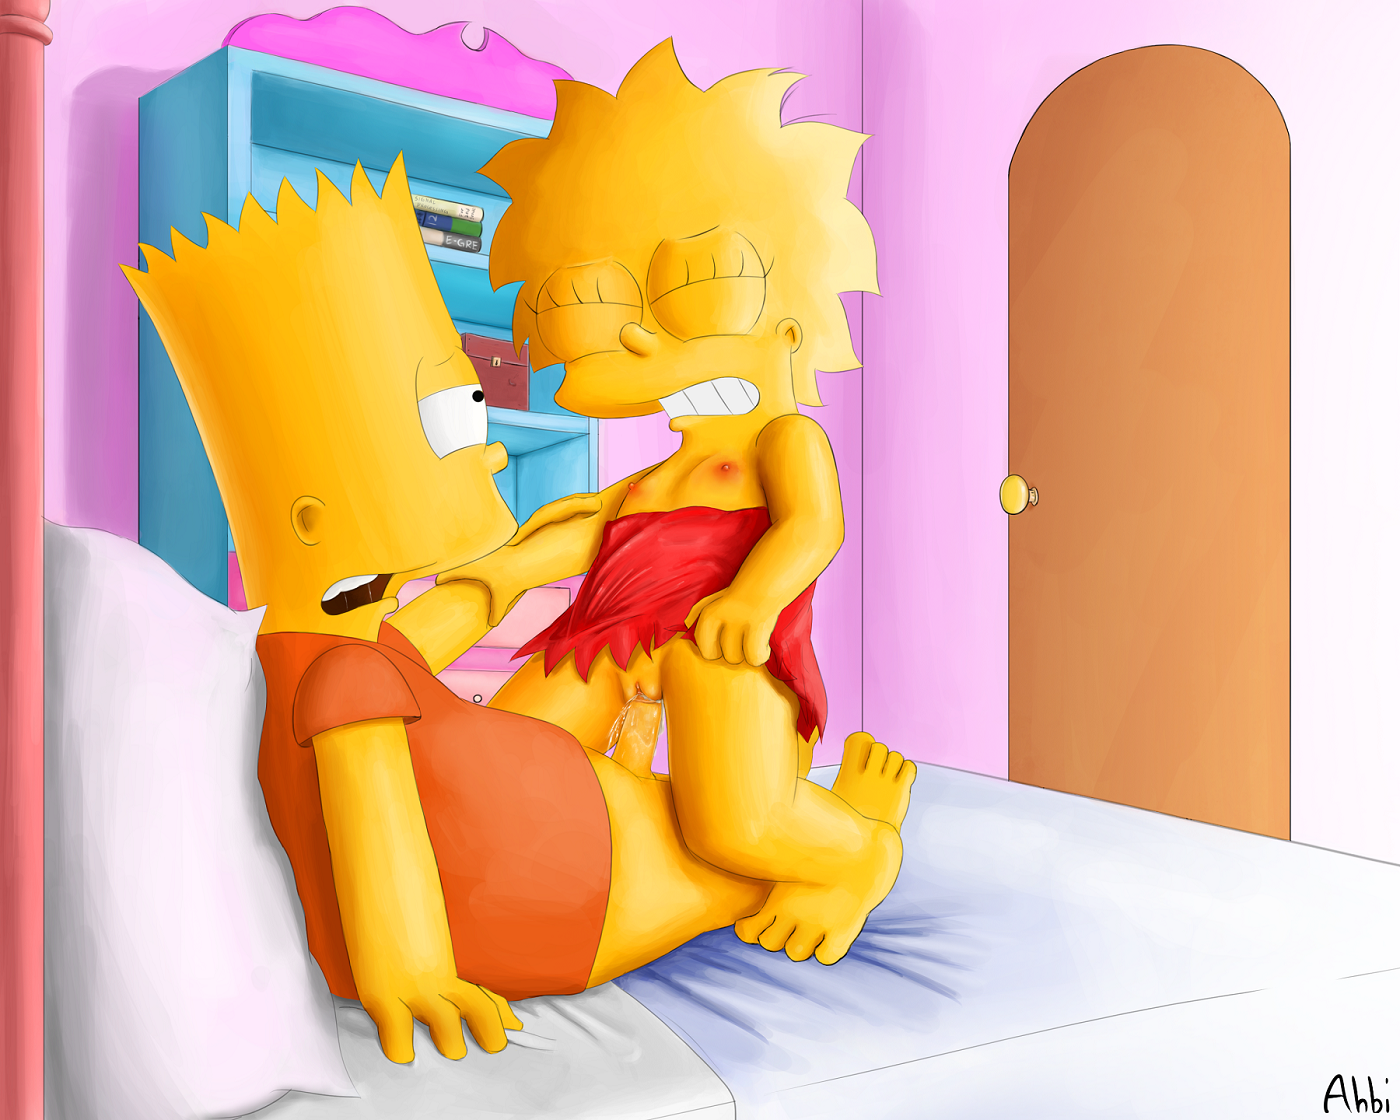 Simpsons porno bart